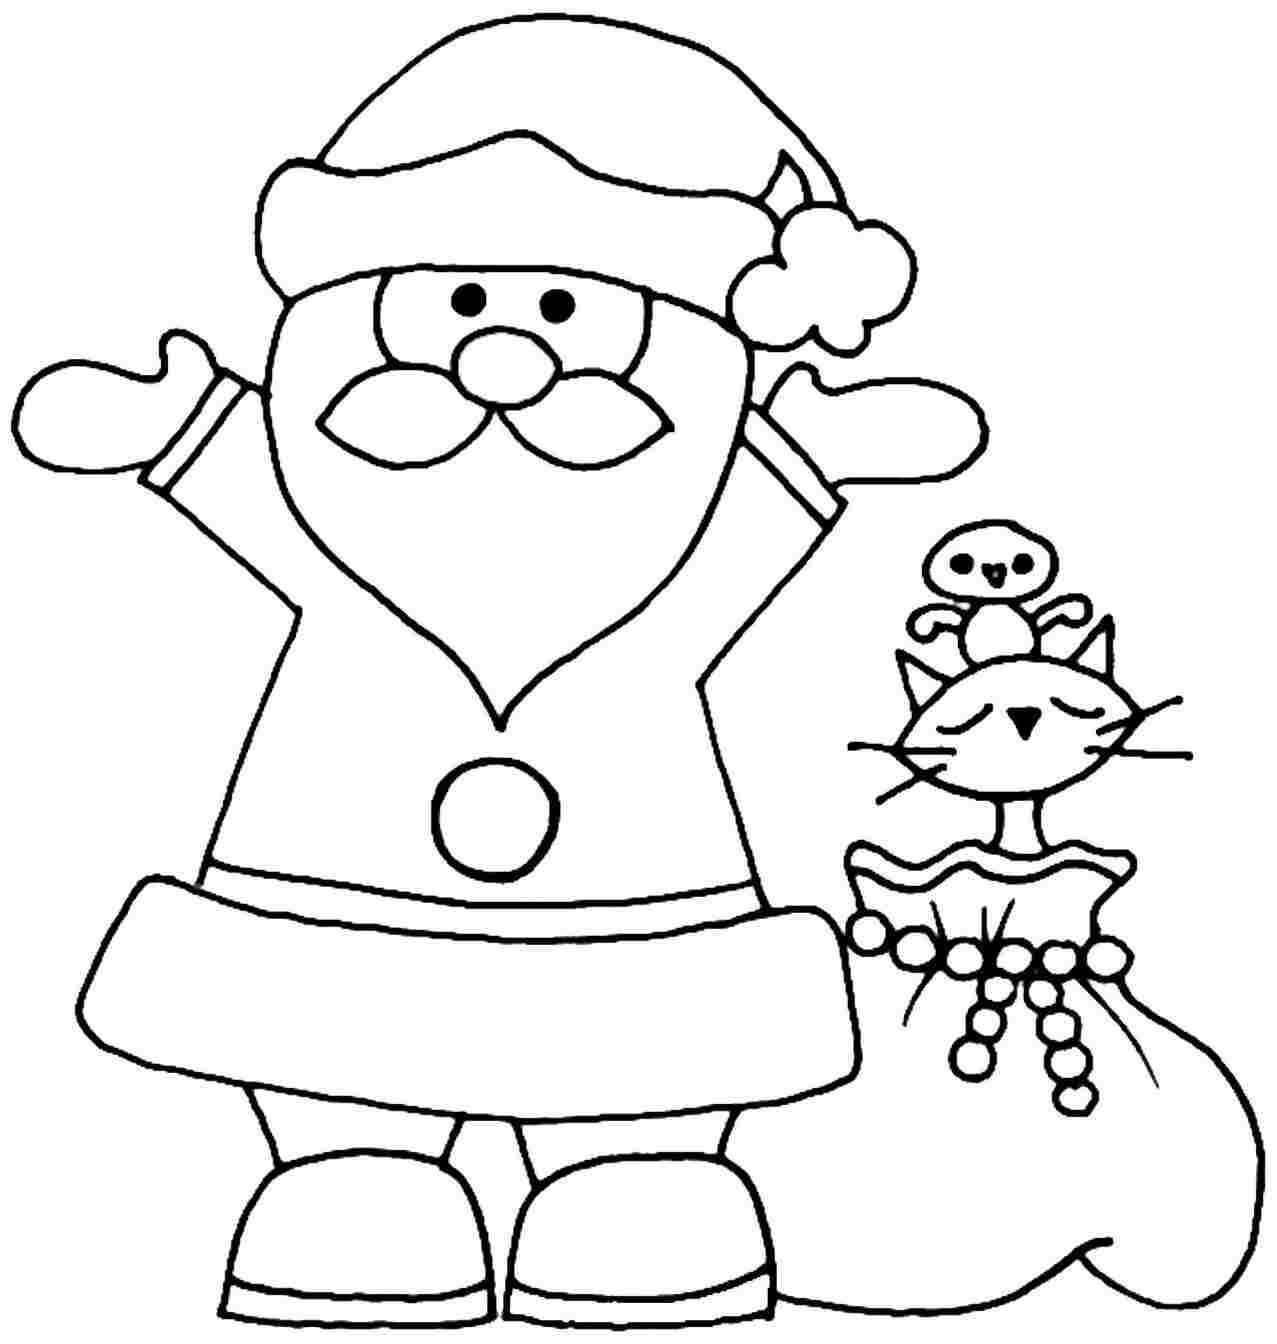 Christmas Santa Coloring Page for Preschoolers